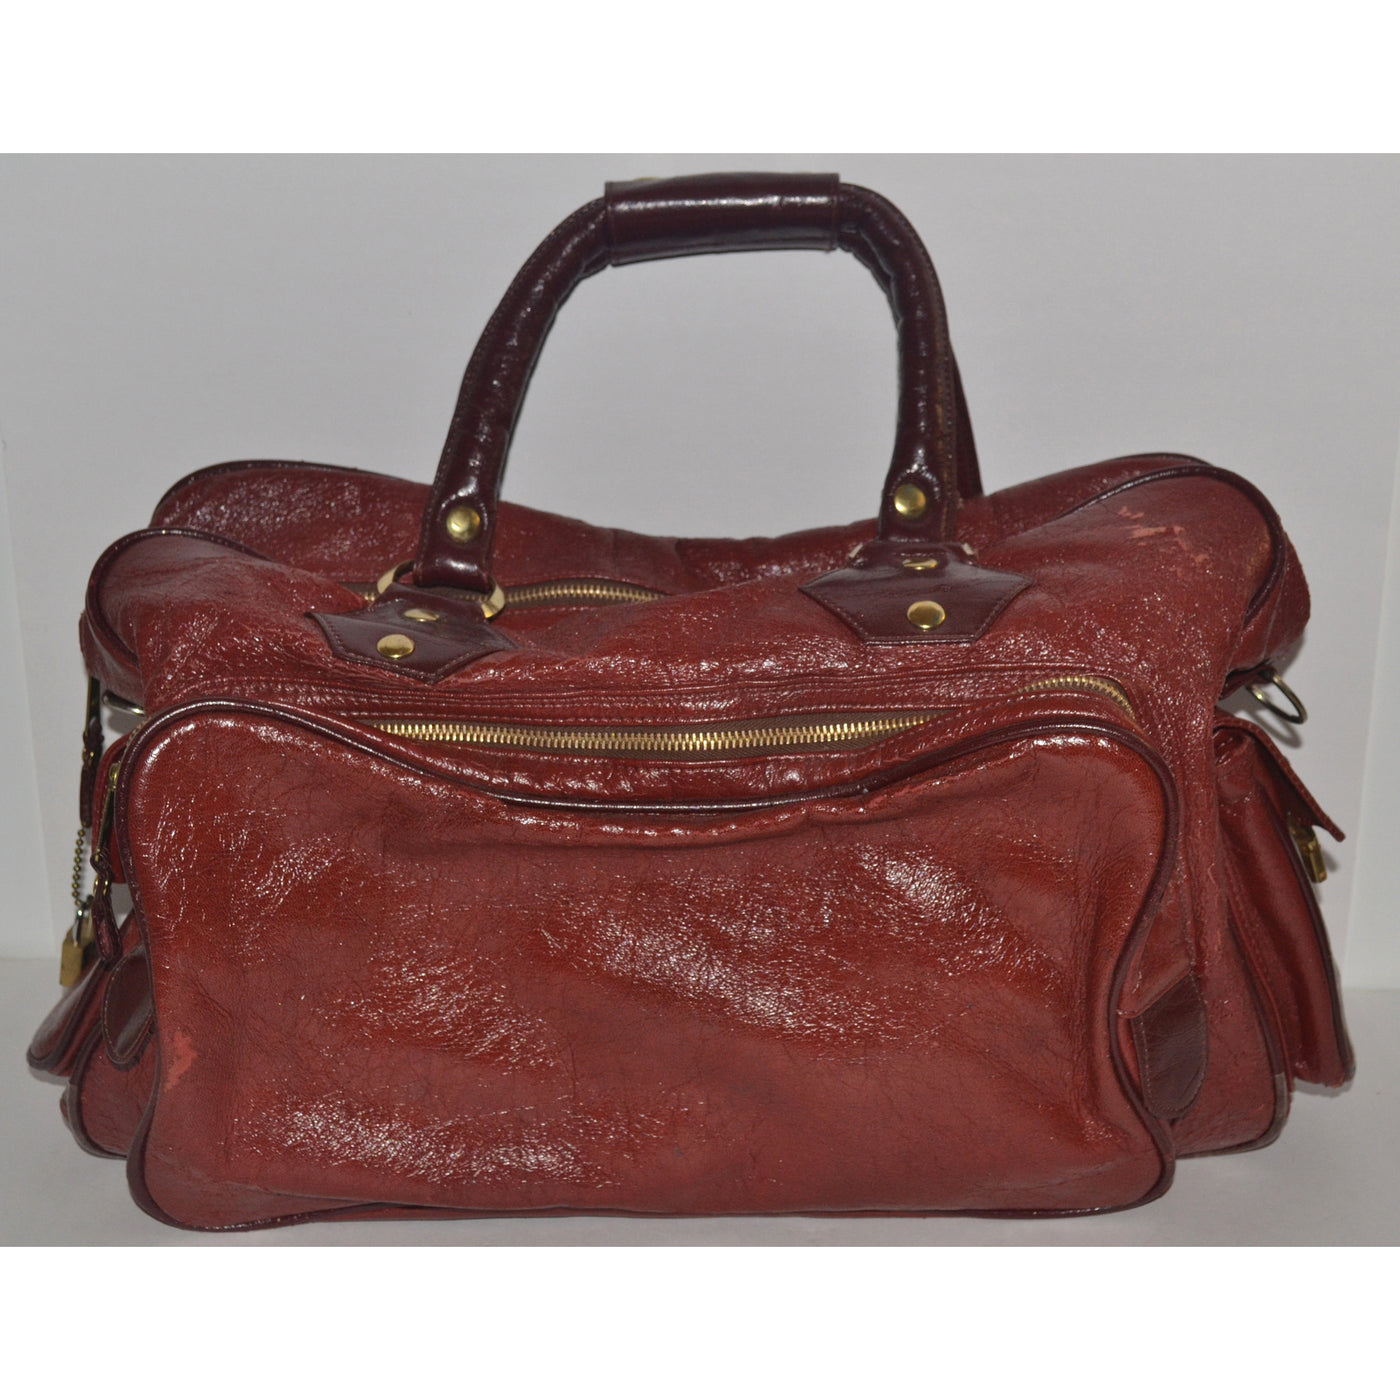 Vintage Burgundy Travel Bag By Monarch Luggage 